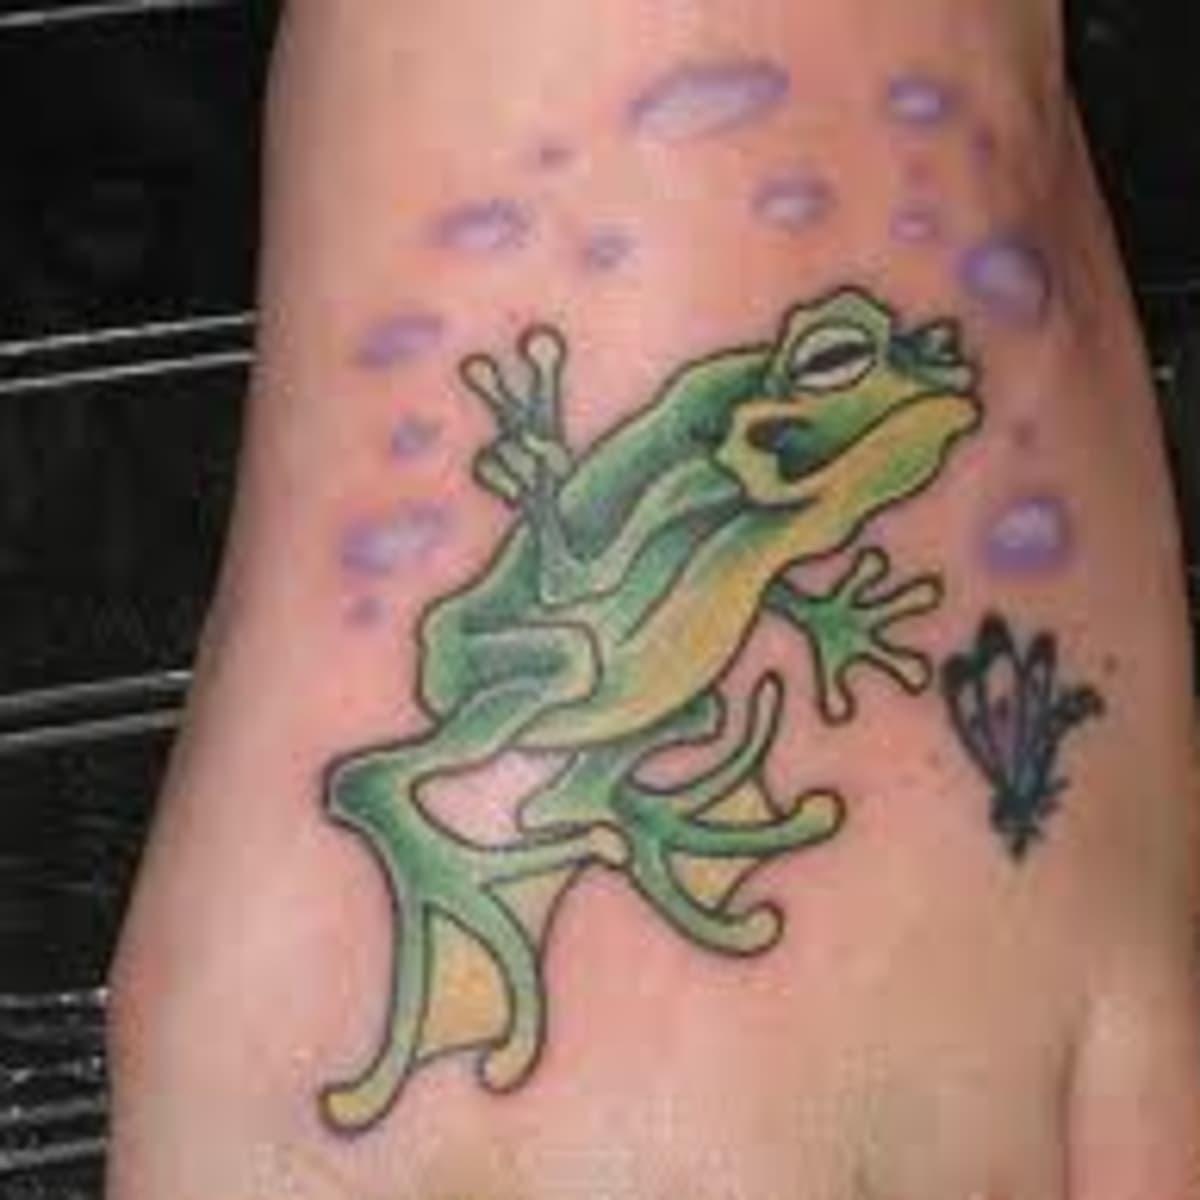 Cute Small Frog Tattoo Idea